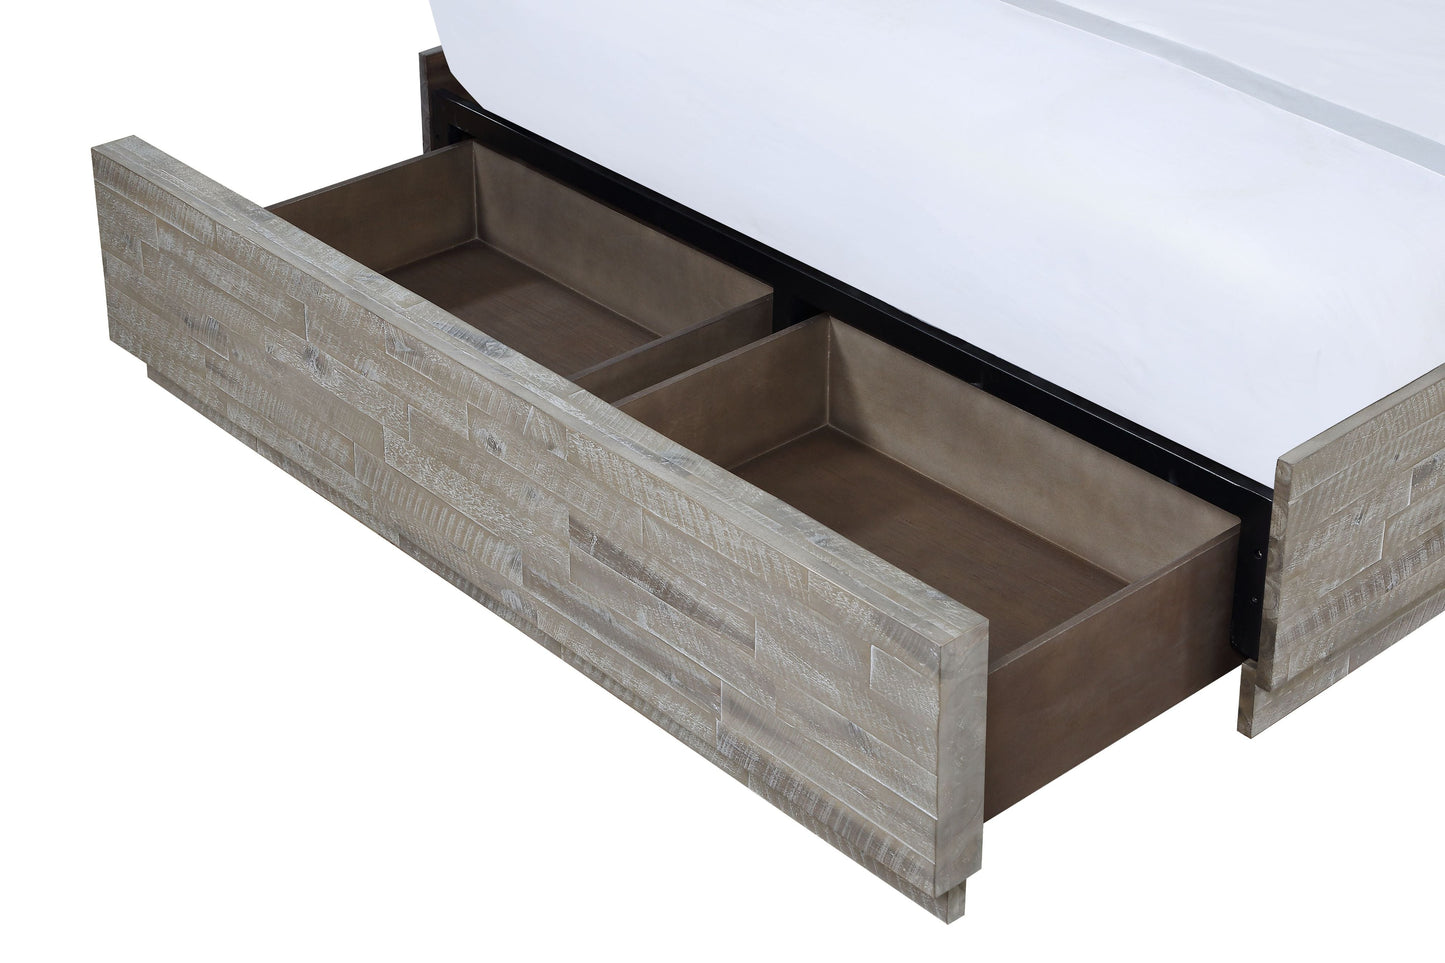 Modus Alexandra Full Storage Bed in Rustic Latte